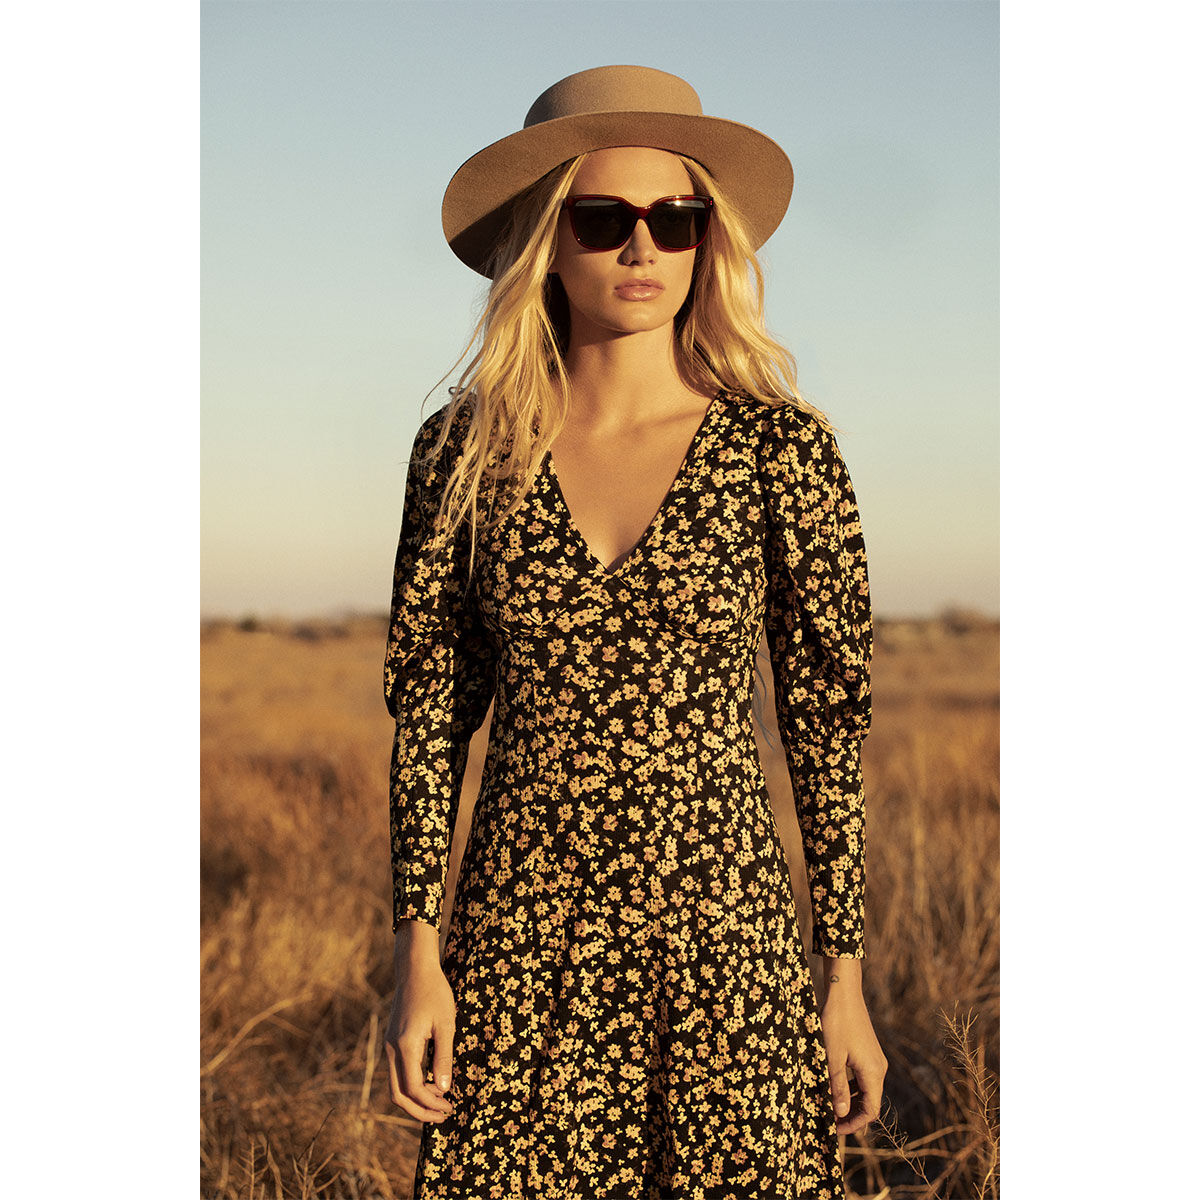 Serengeti WAKOTA - Casual Women's Sunglasses - Eco-Nylon Frame